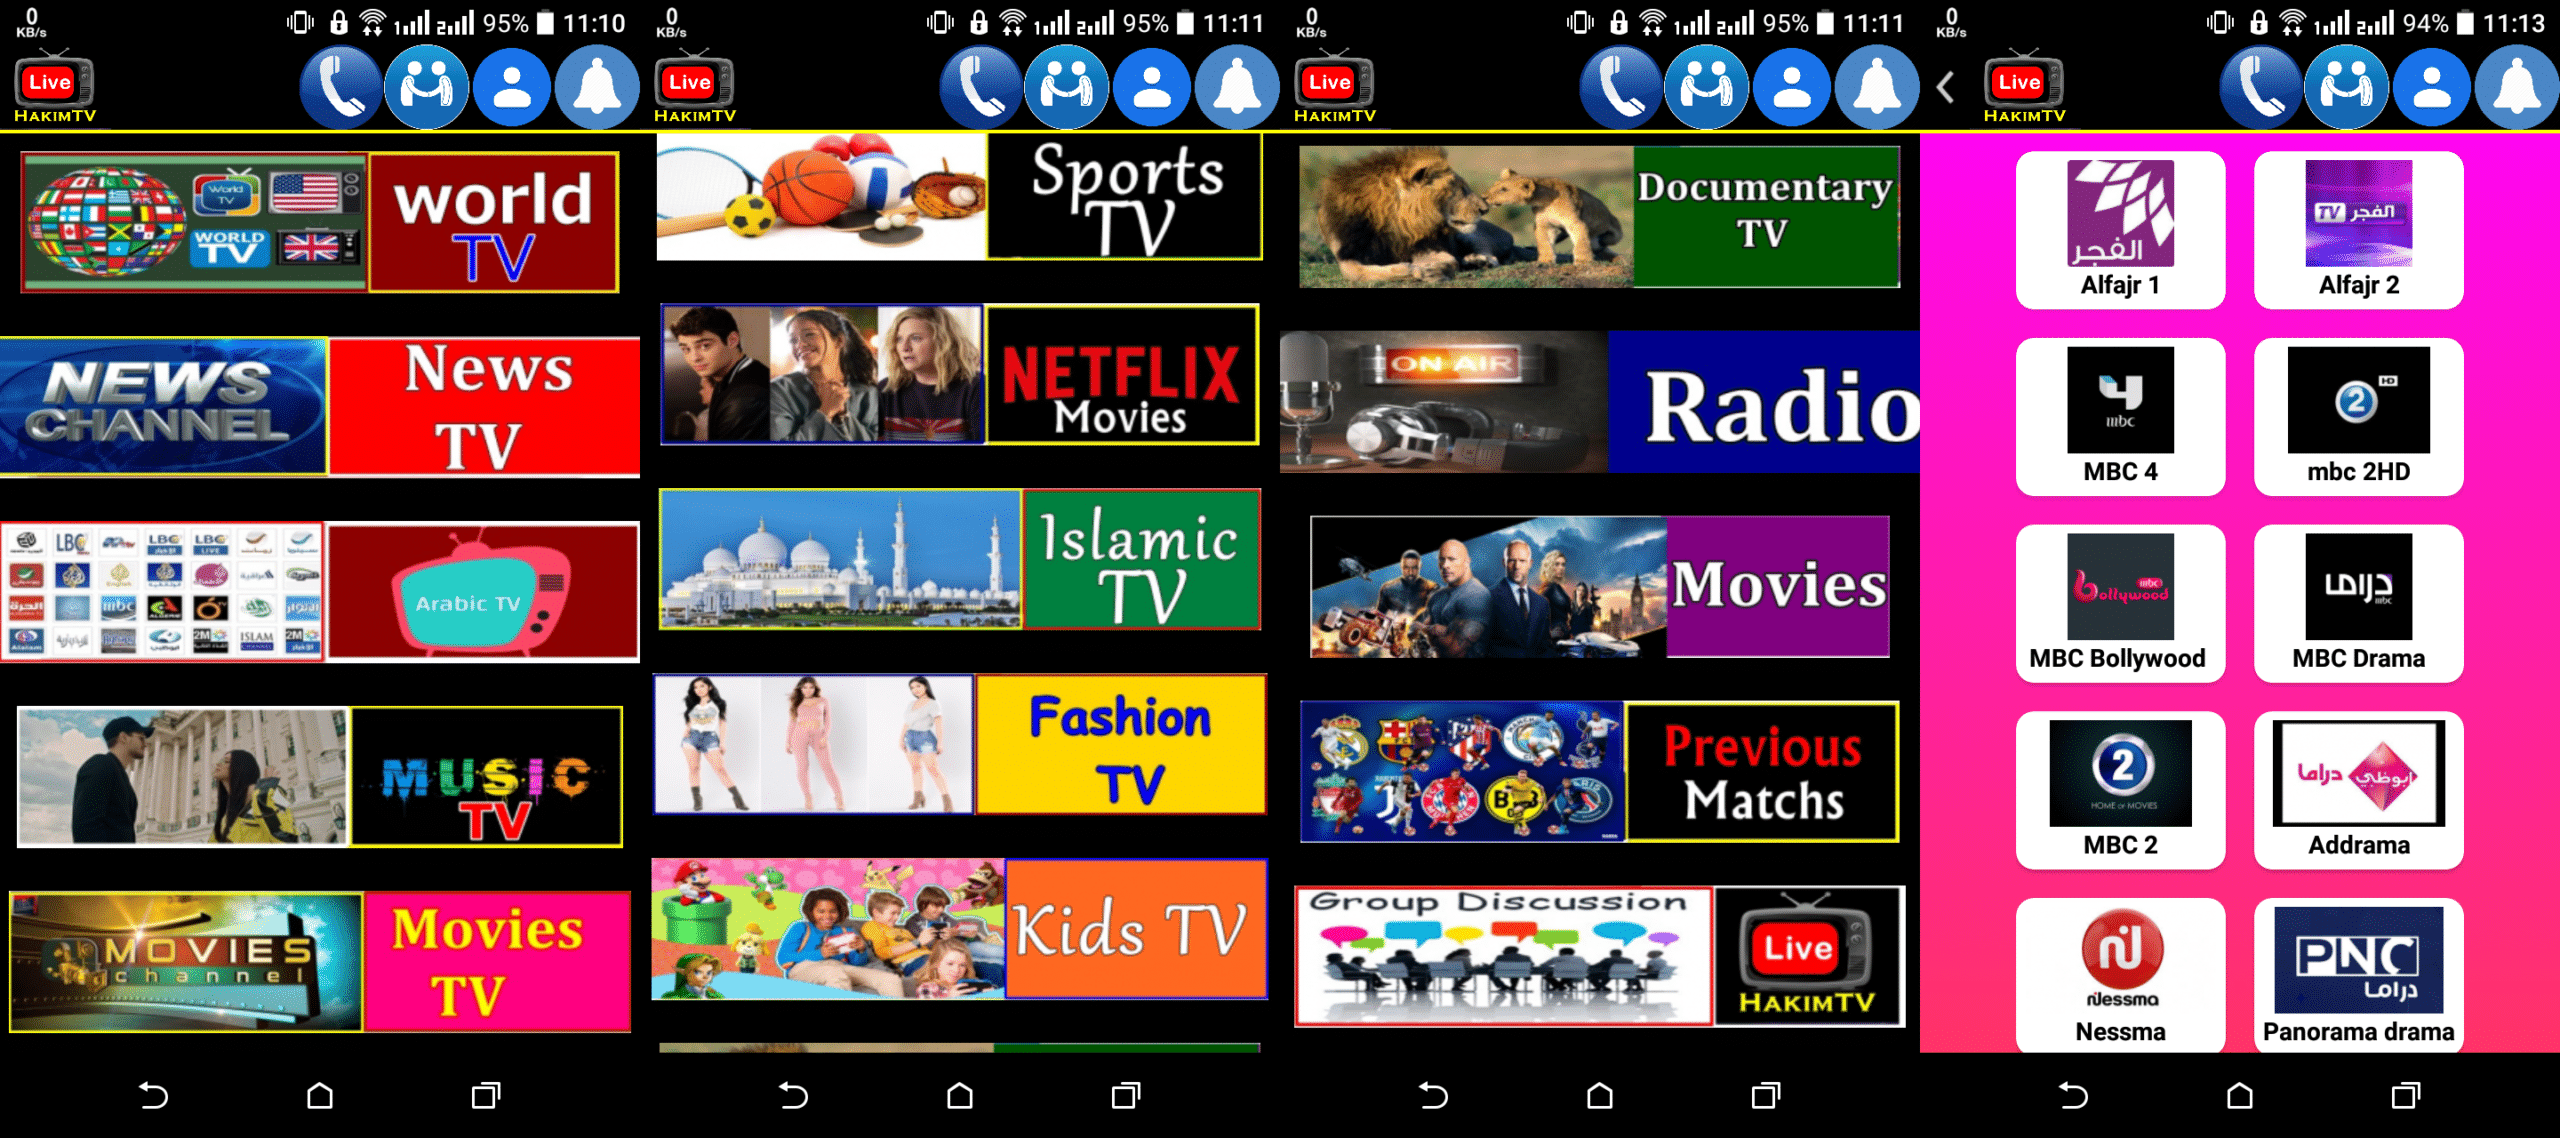 HAKIM TV APK HD Quality [LATEST] 2020 2